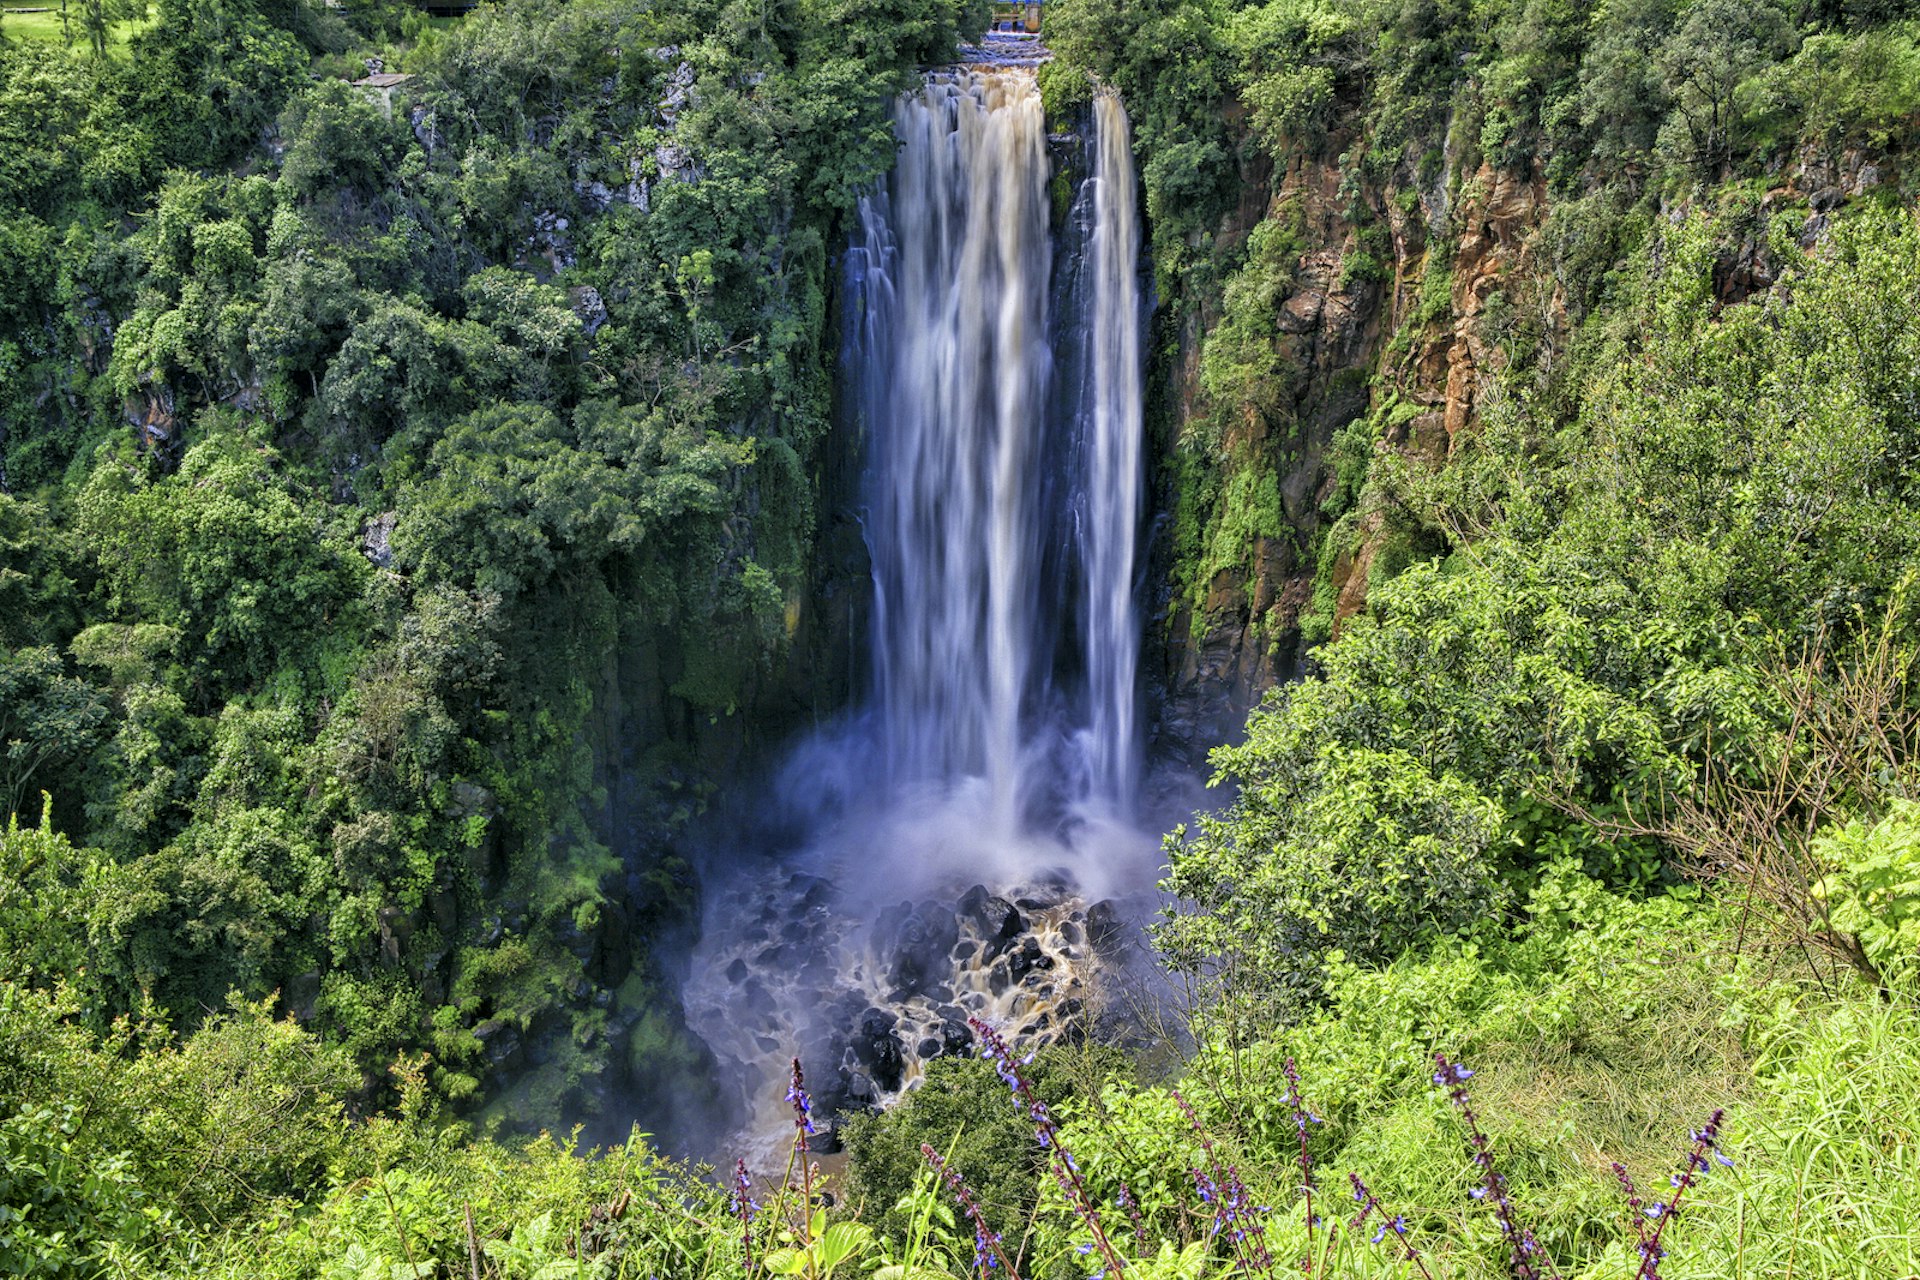 A waterfall in the Aberdare Mountain Range, Kenya